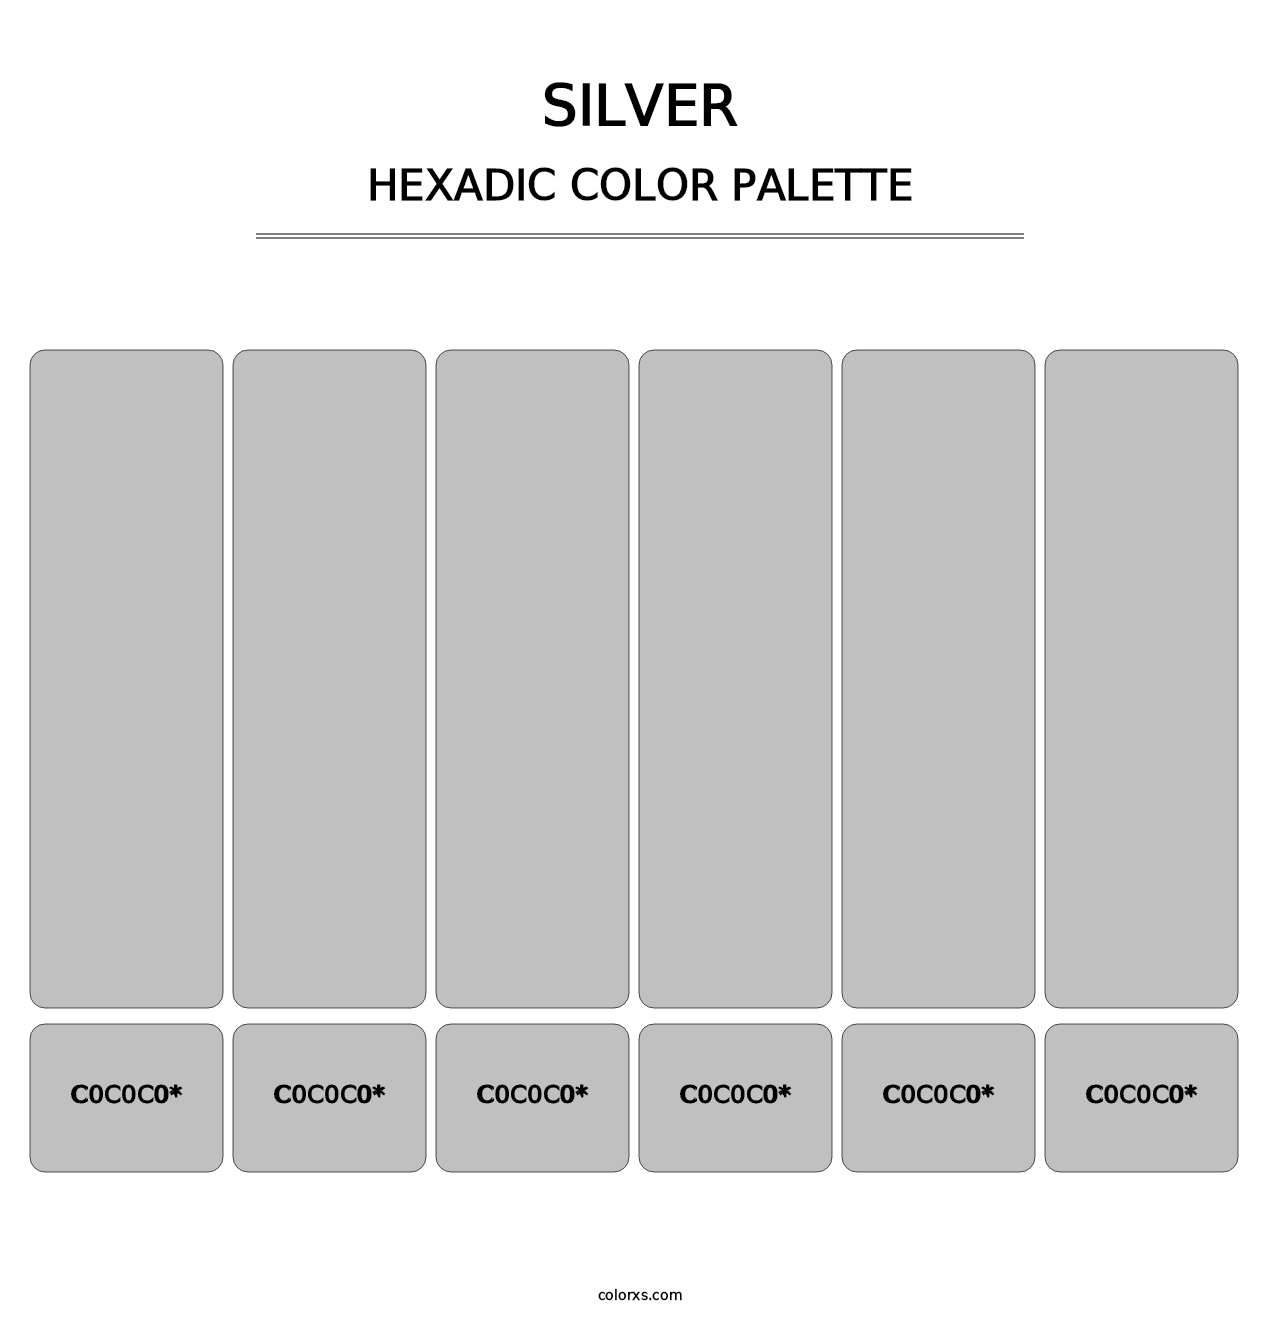 Silver - Hexadic Color Palette